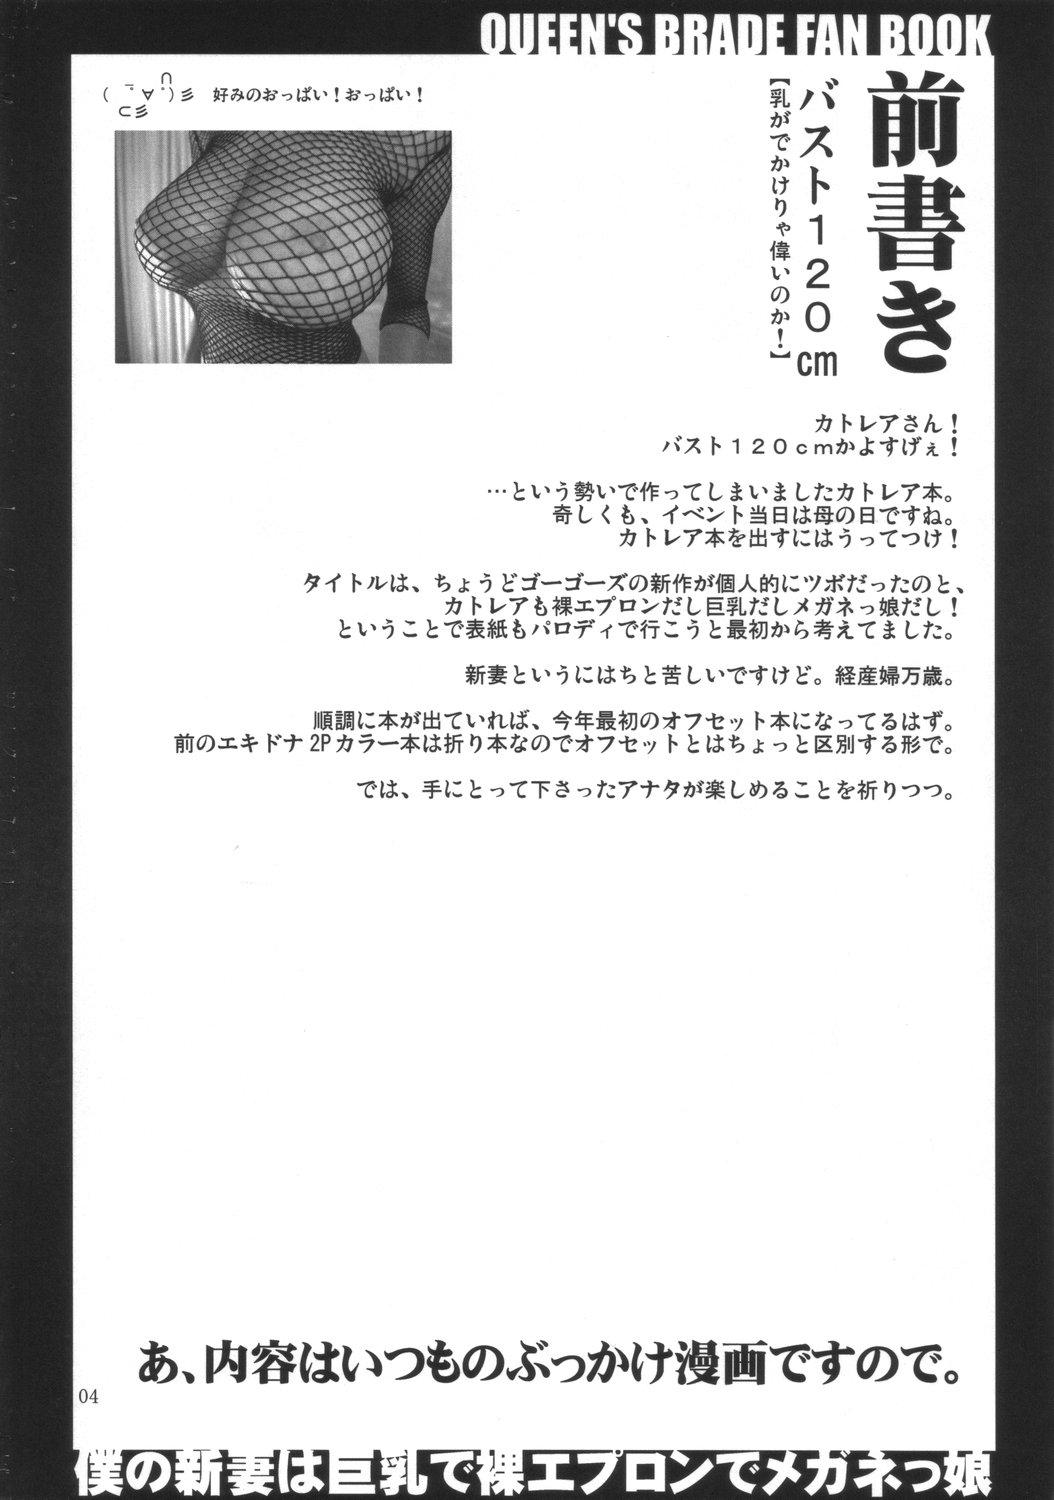 BOKUNO NIIDUMAHA KYONYUUDE HADAKAEPURONDE MEGANEKKO~GoGo's Models 2